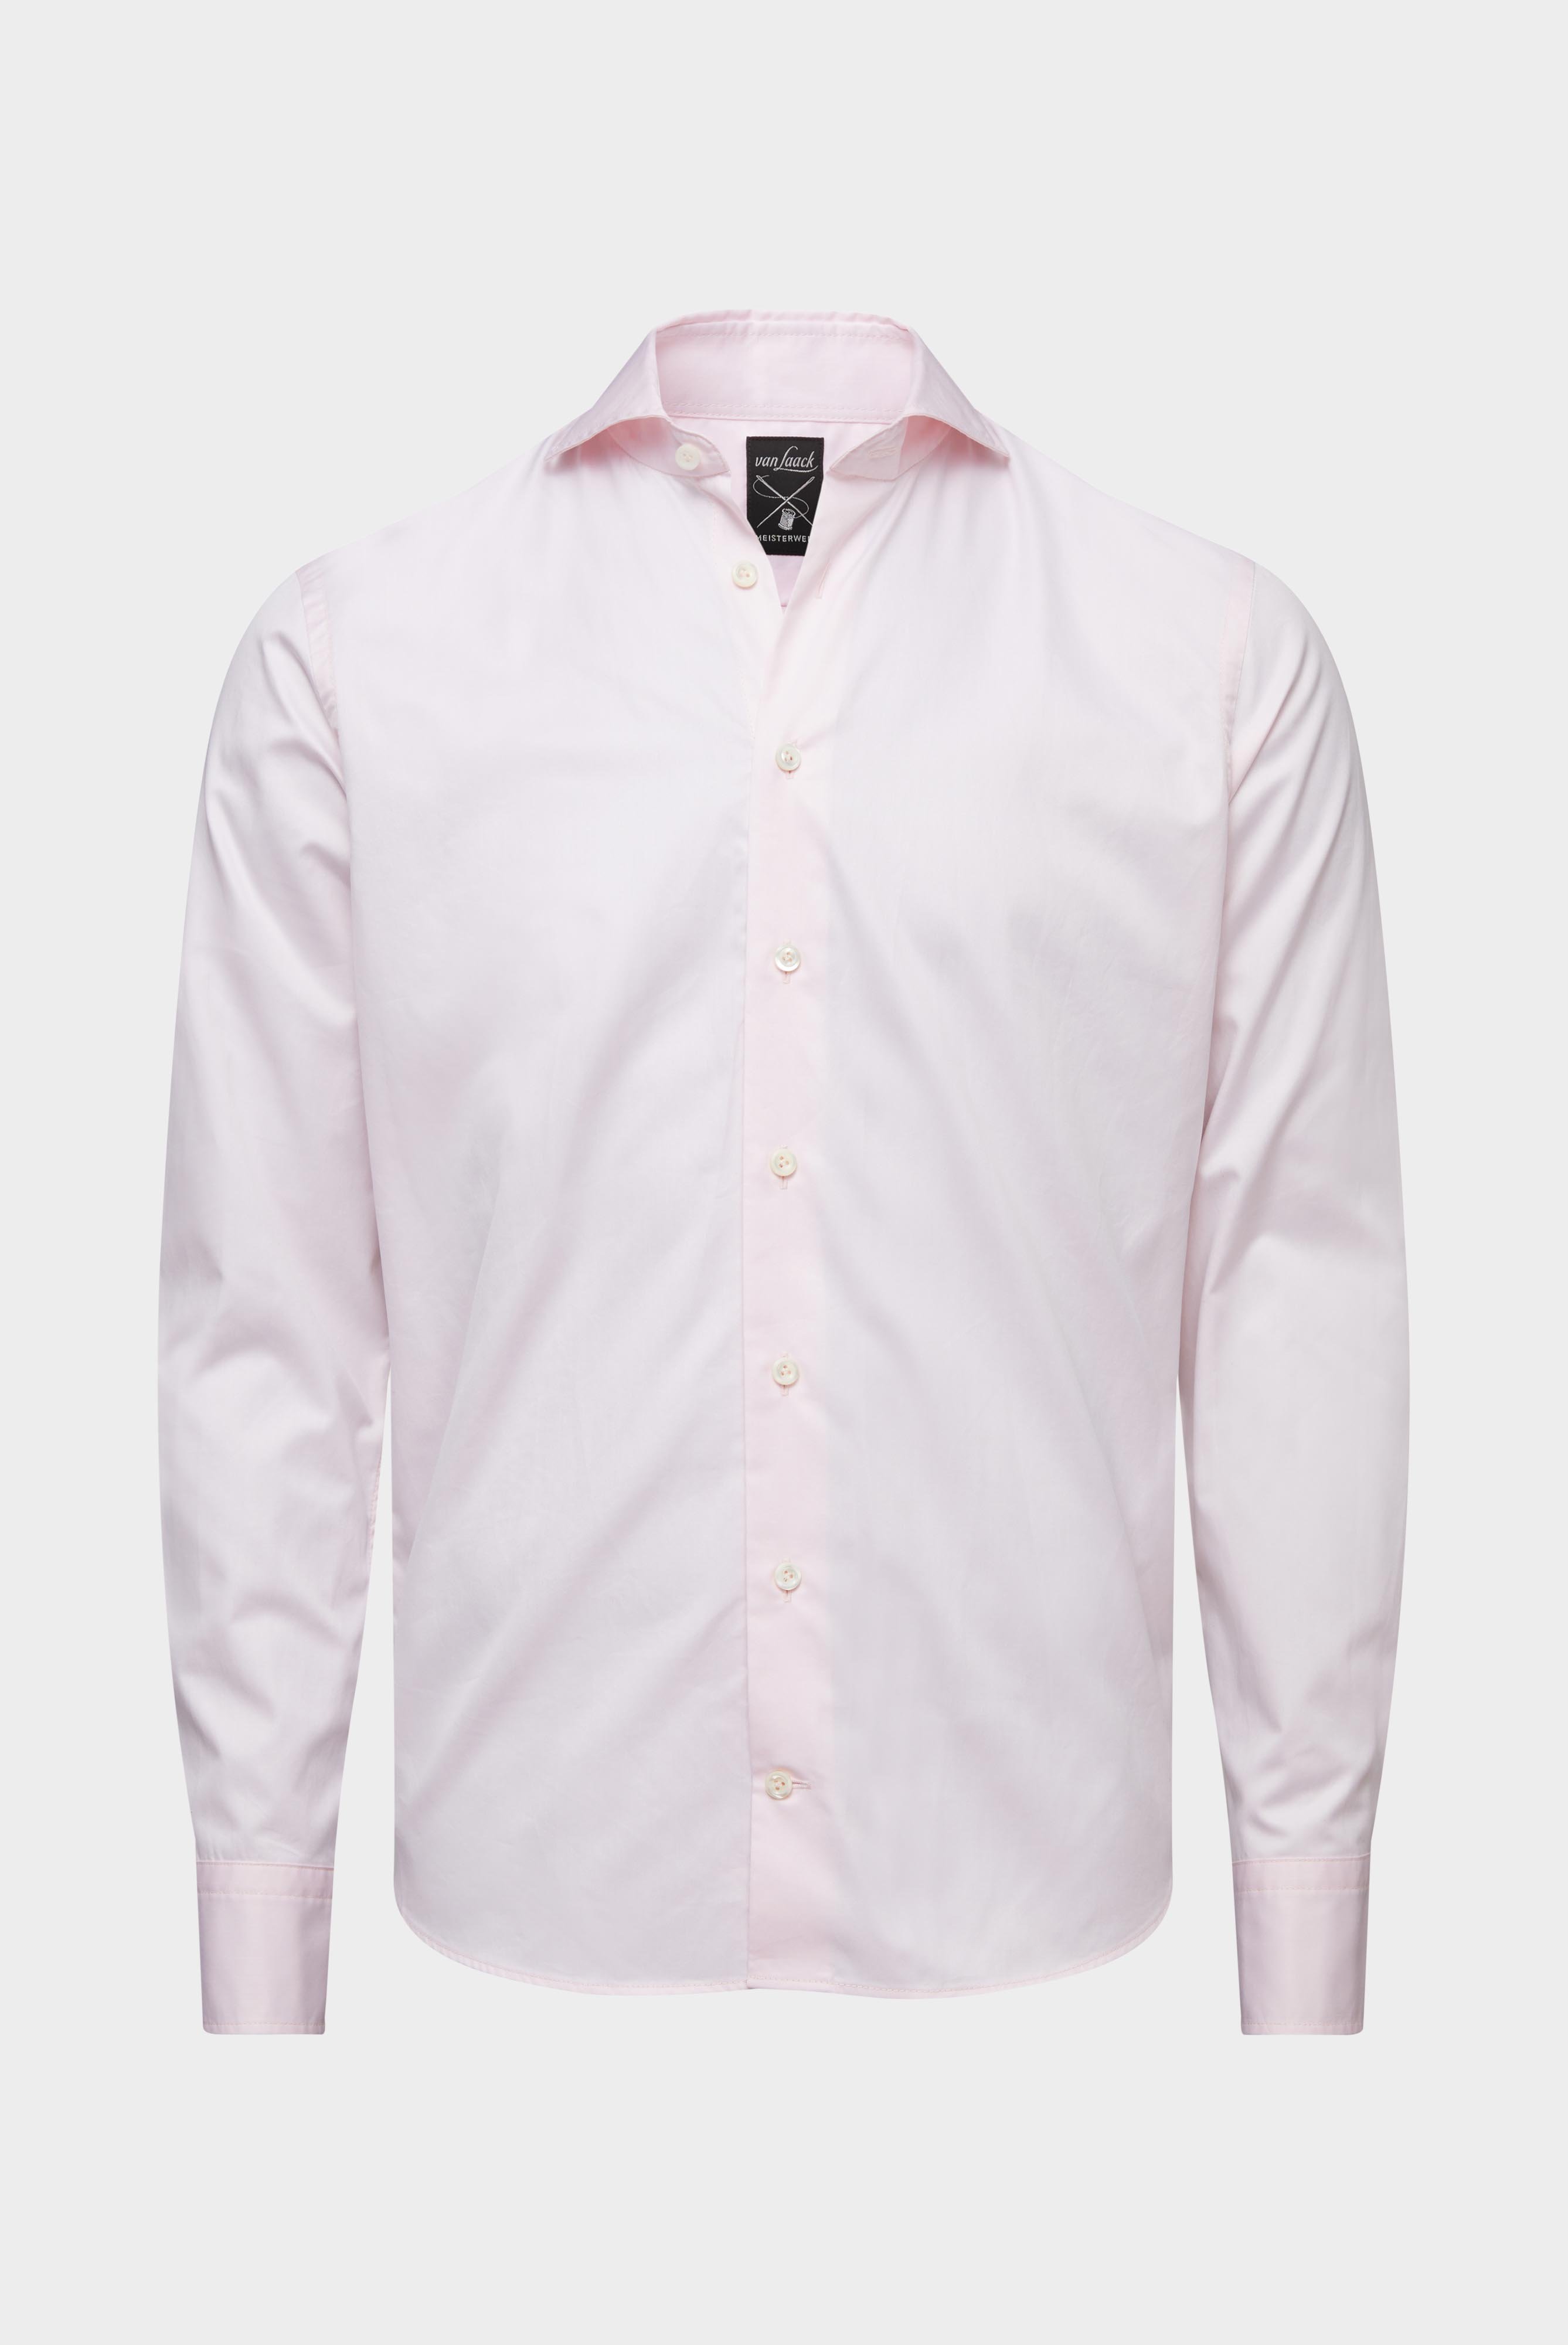 Business Hemden+Twill Hemd Slim Fit+20.2015.EB.160708.520.44